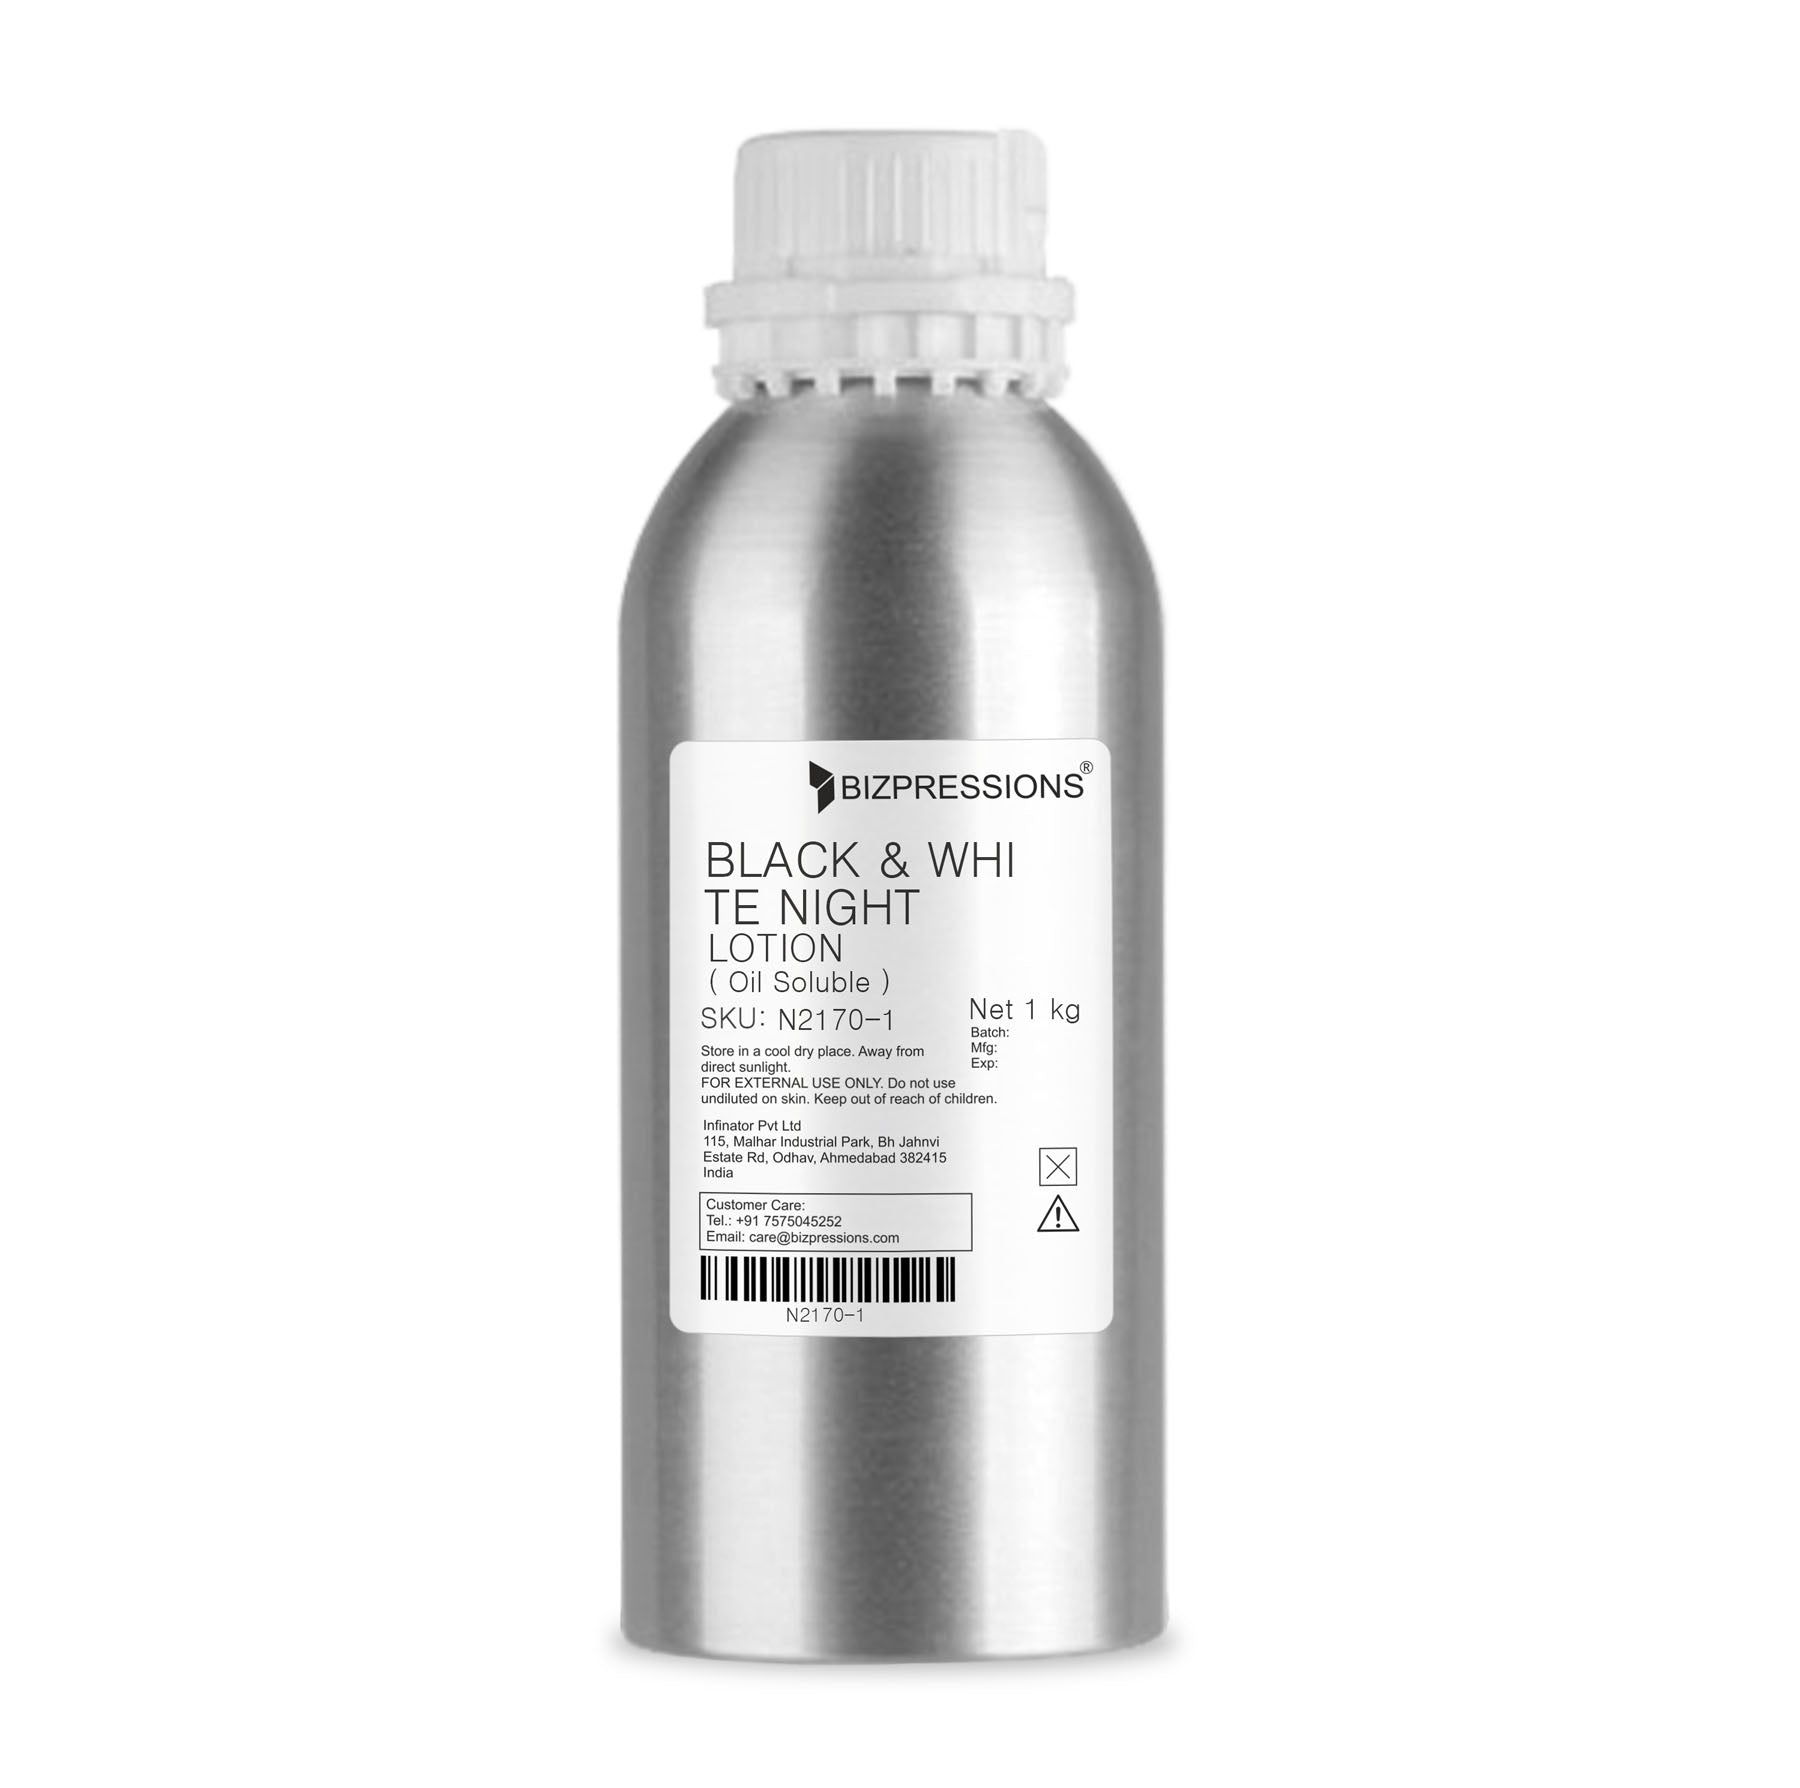 BLACK & WHITE NIGHT LOTION - Fragrance ( Oil Soluble ) - 1 kg